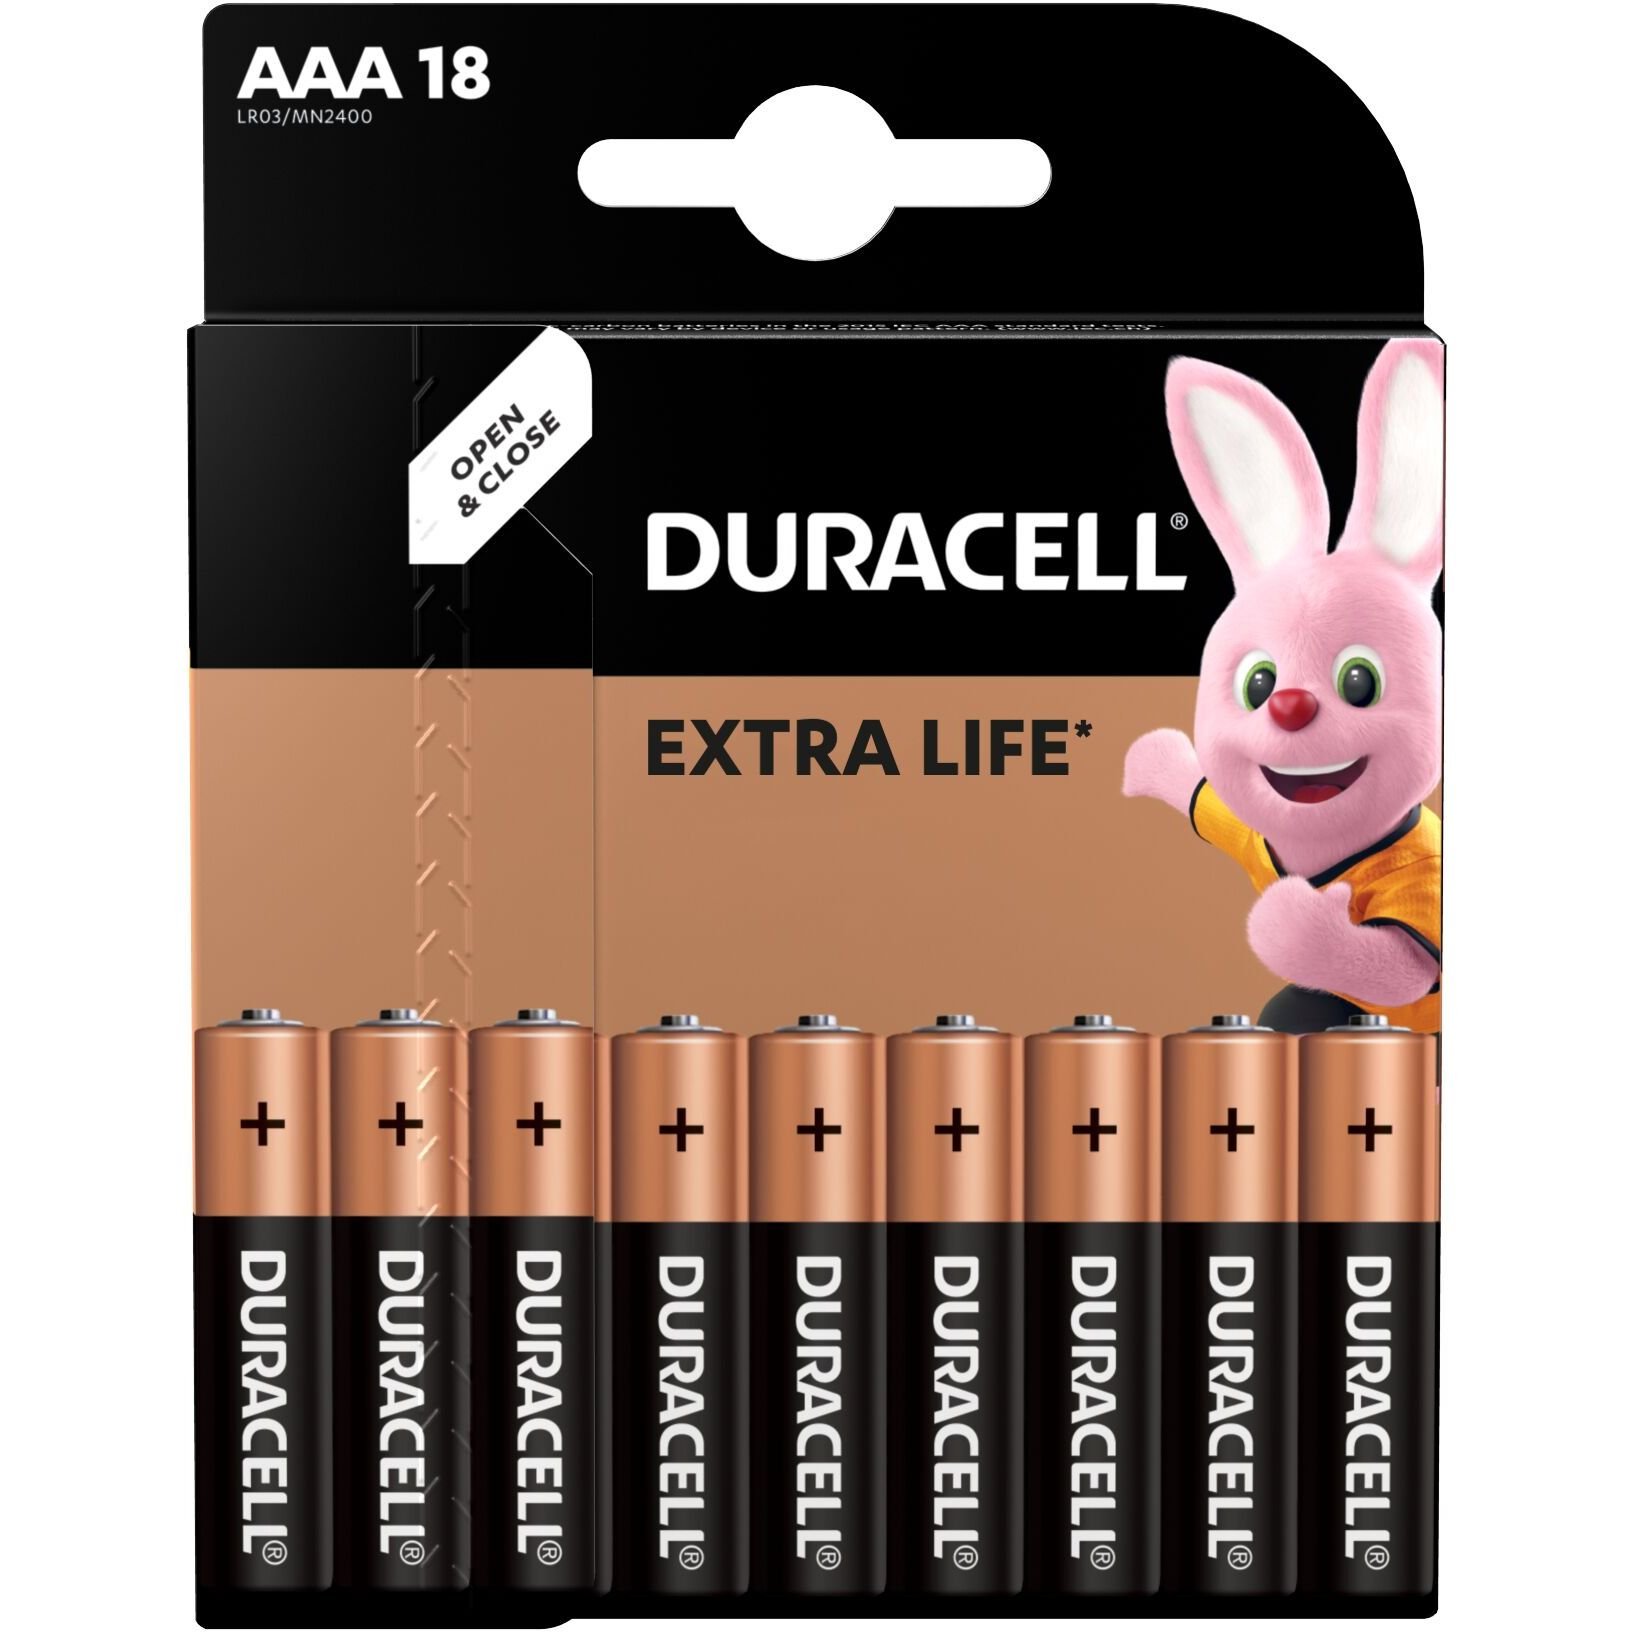 Щелочные батарейки мизинчиковые Duracell 1.5 V AAA LR03/MN2400, 18 шт. (737056) - фото 2